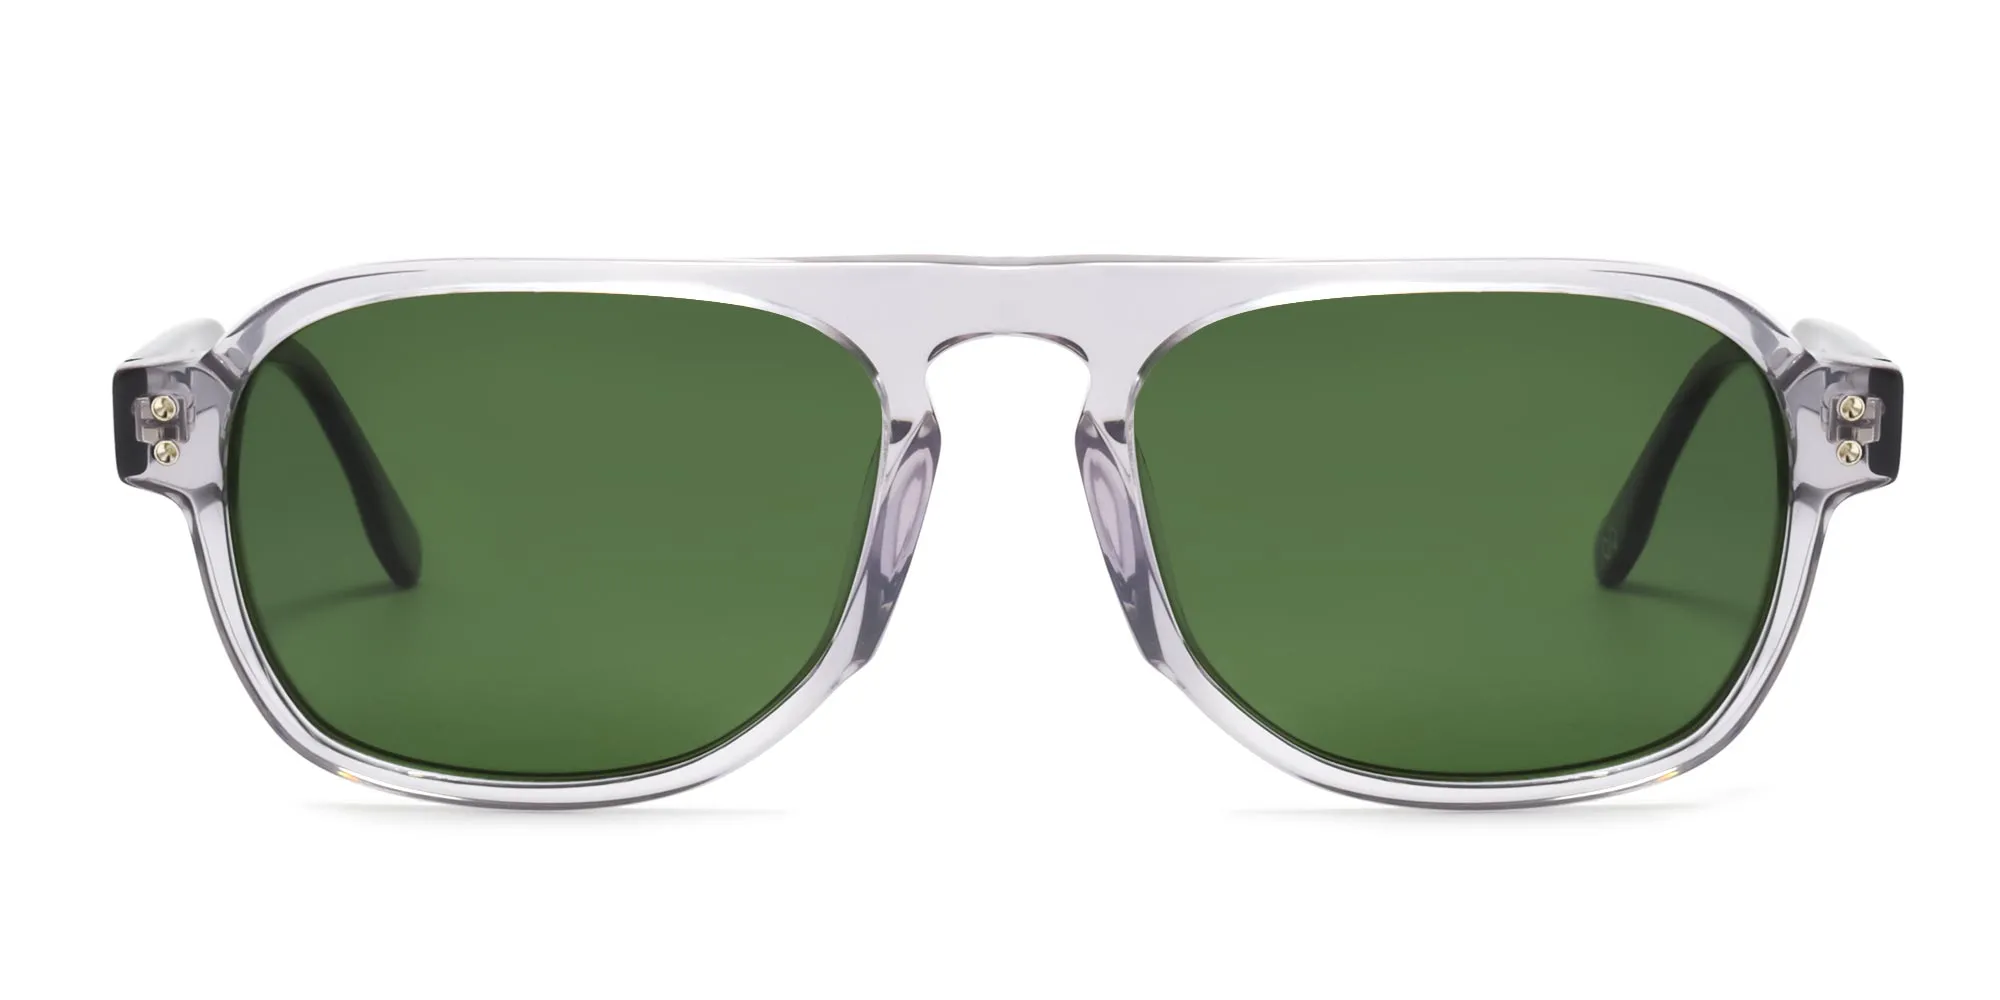 Clear frame green & Black sunglasses